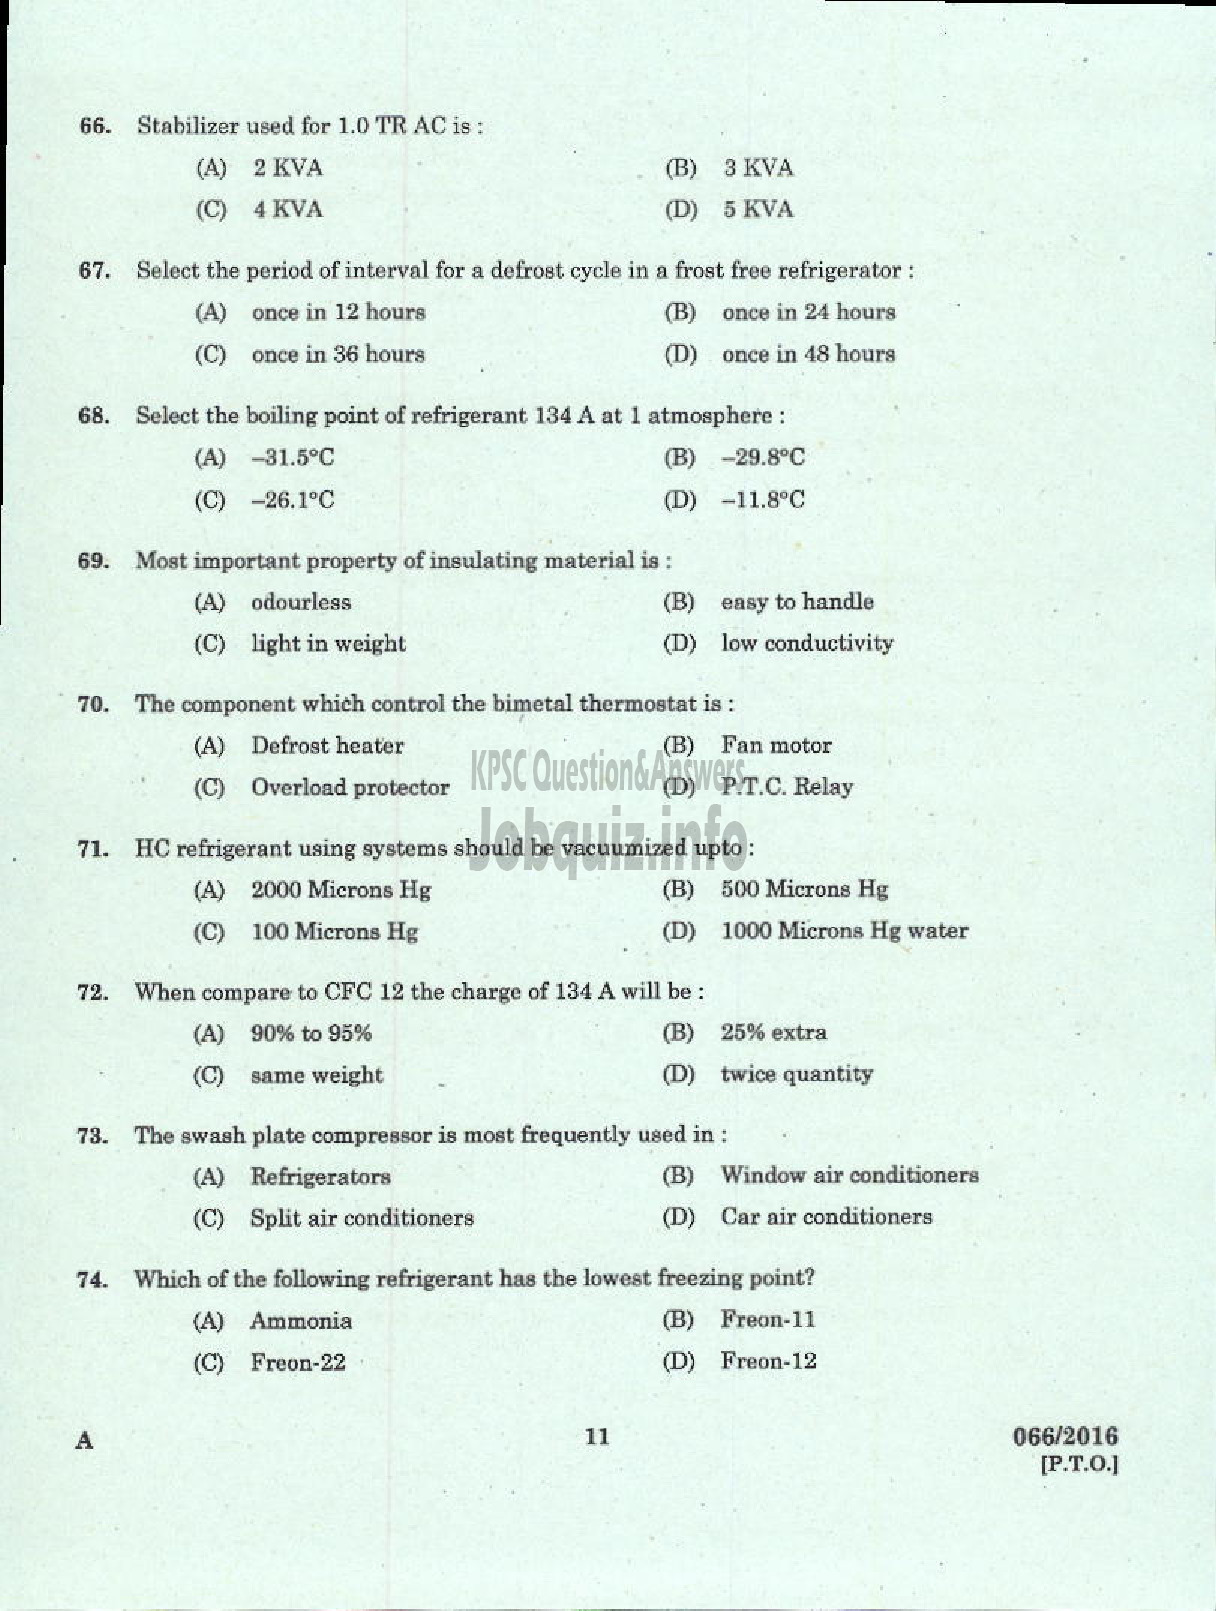 Kerala PSC Question Paper - REFRIGERATION MECHANIC UIP HEALTH SERVICES-9